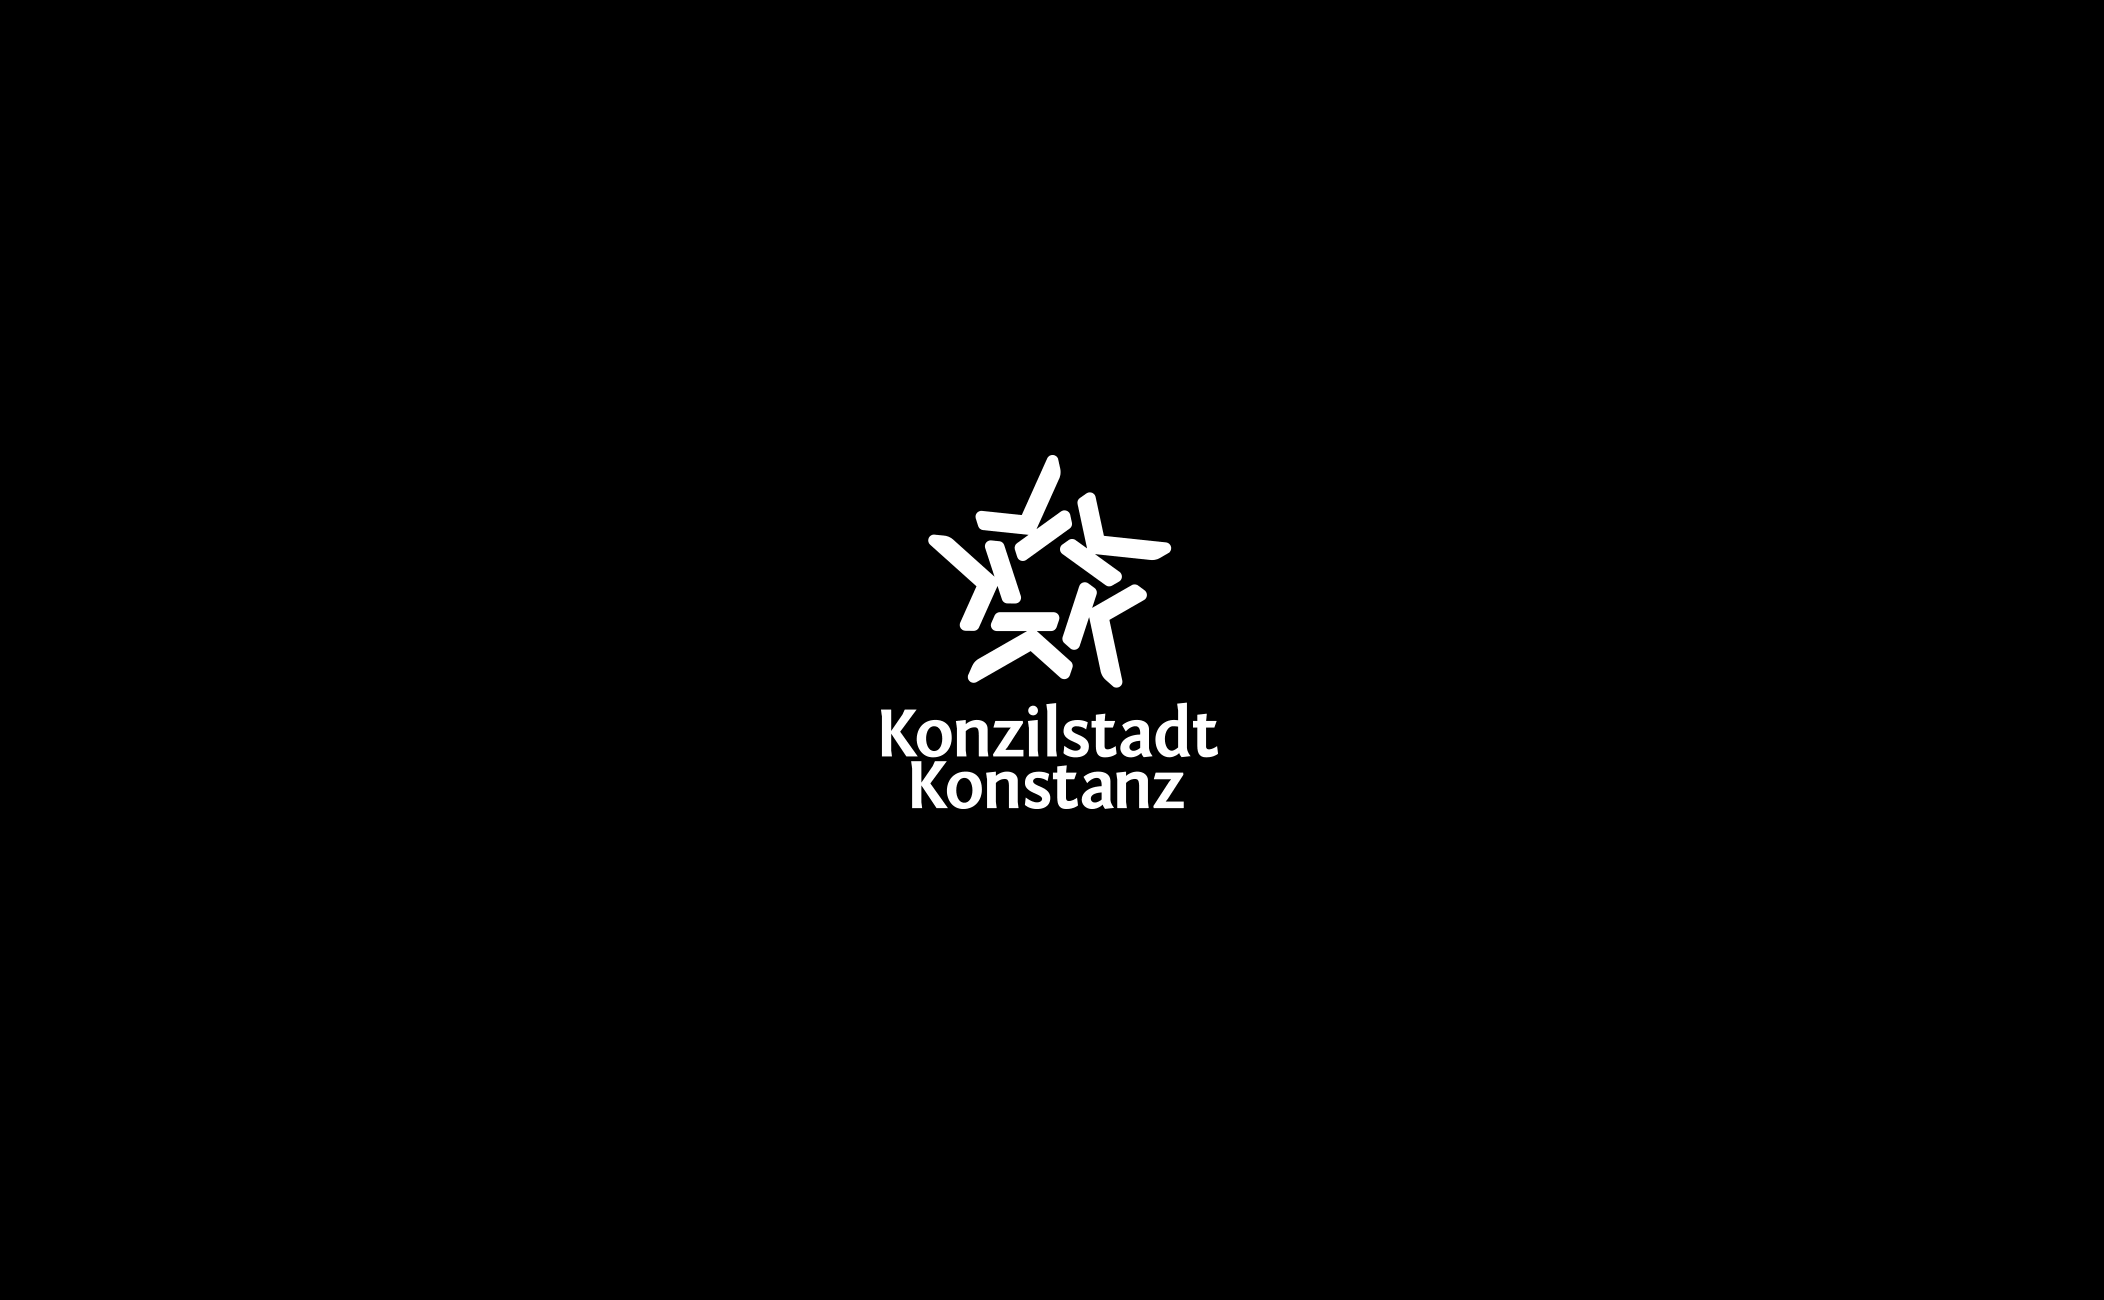 KD_LOGOS_2020_konzilstadt